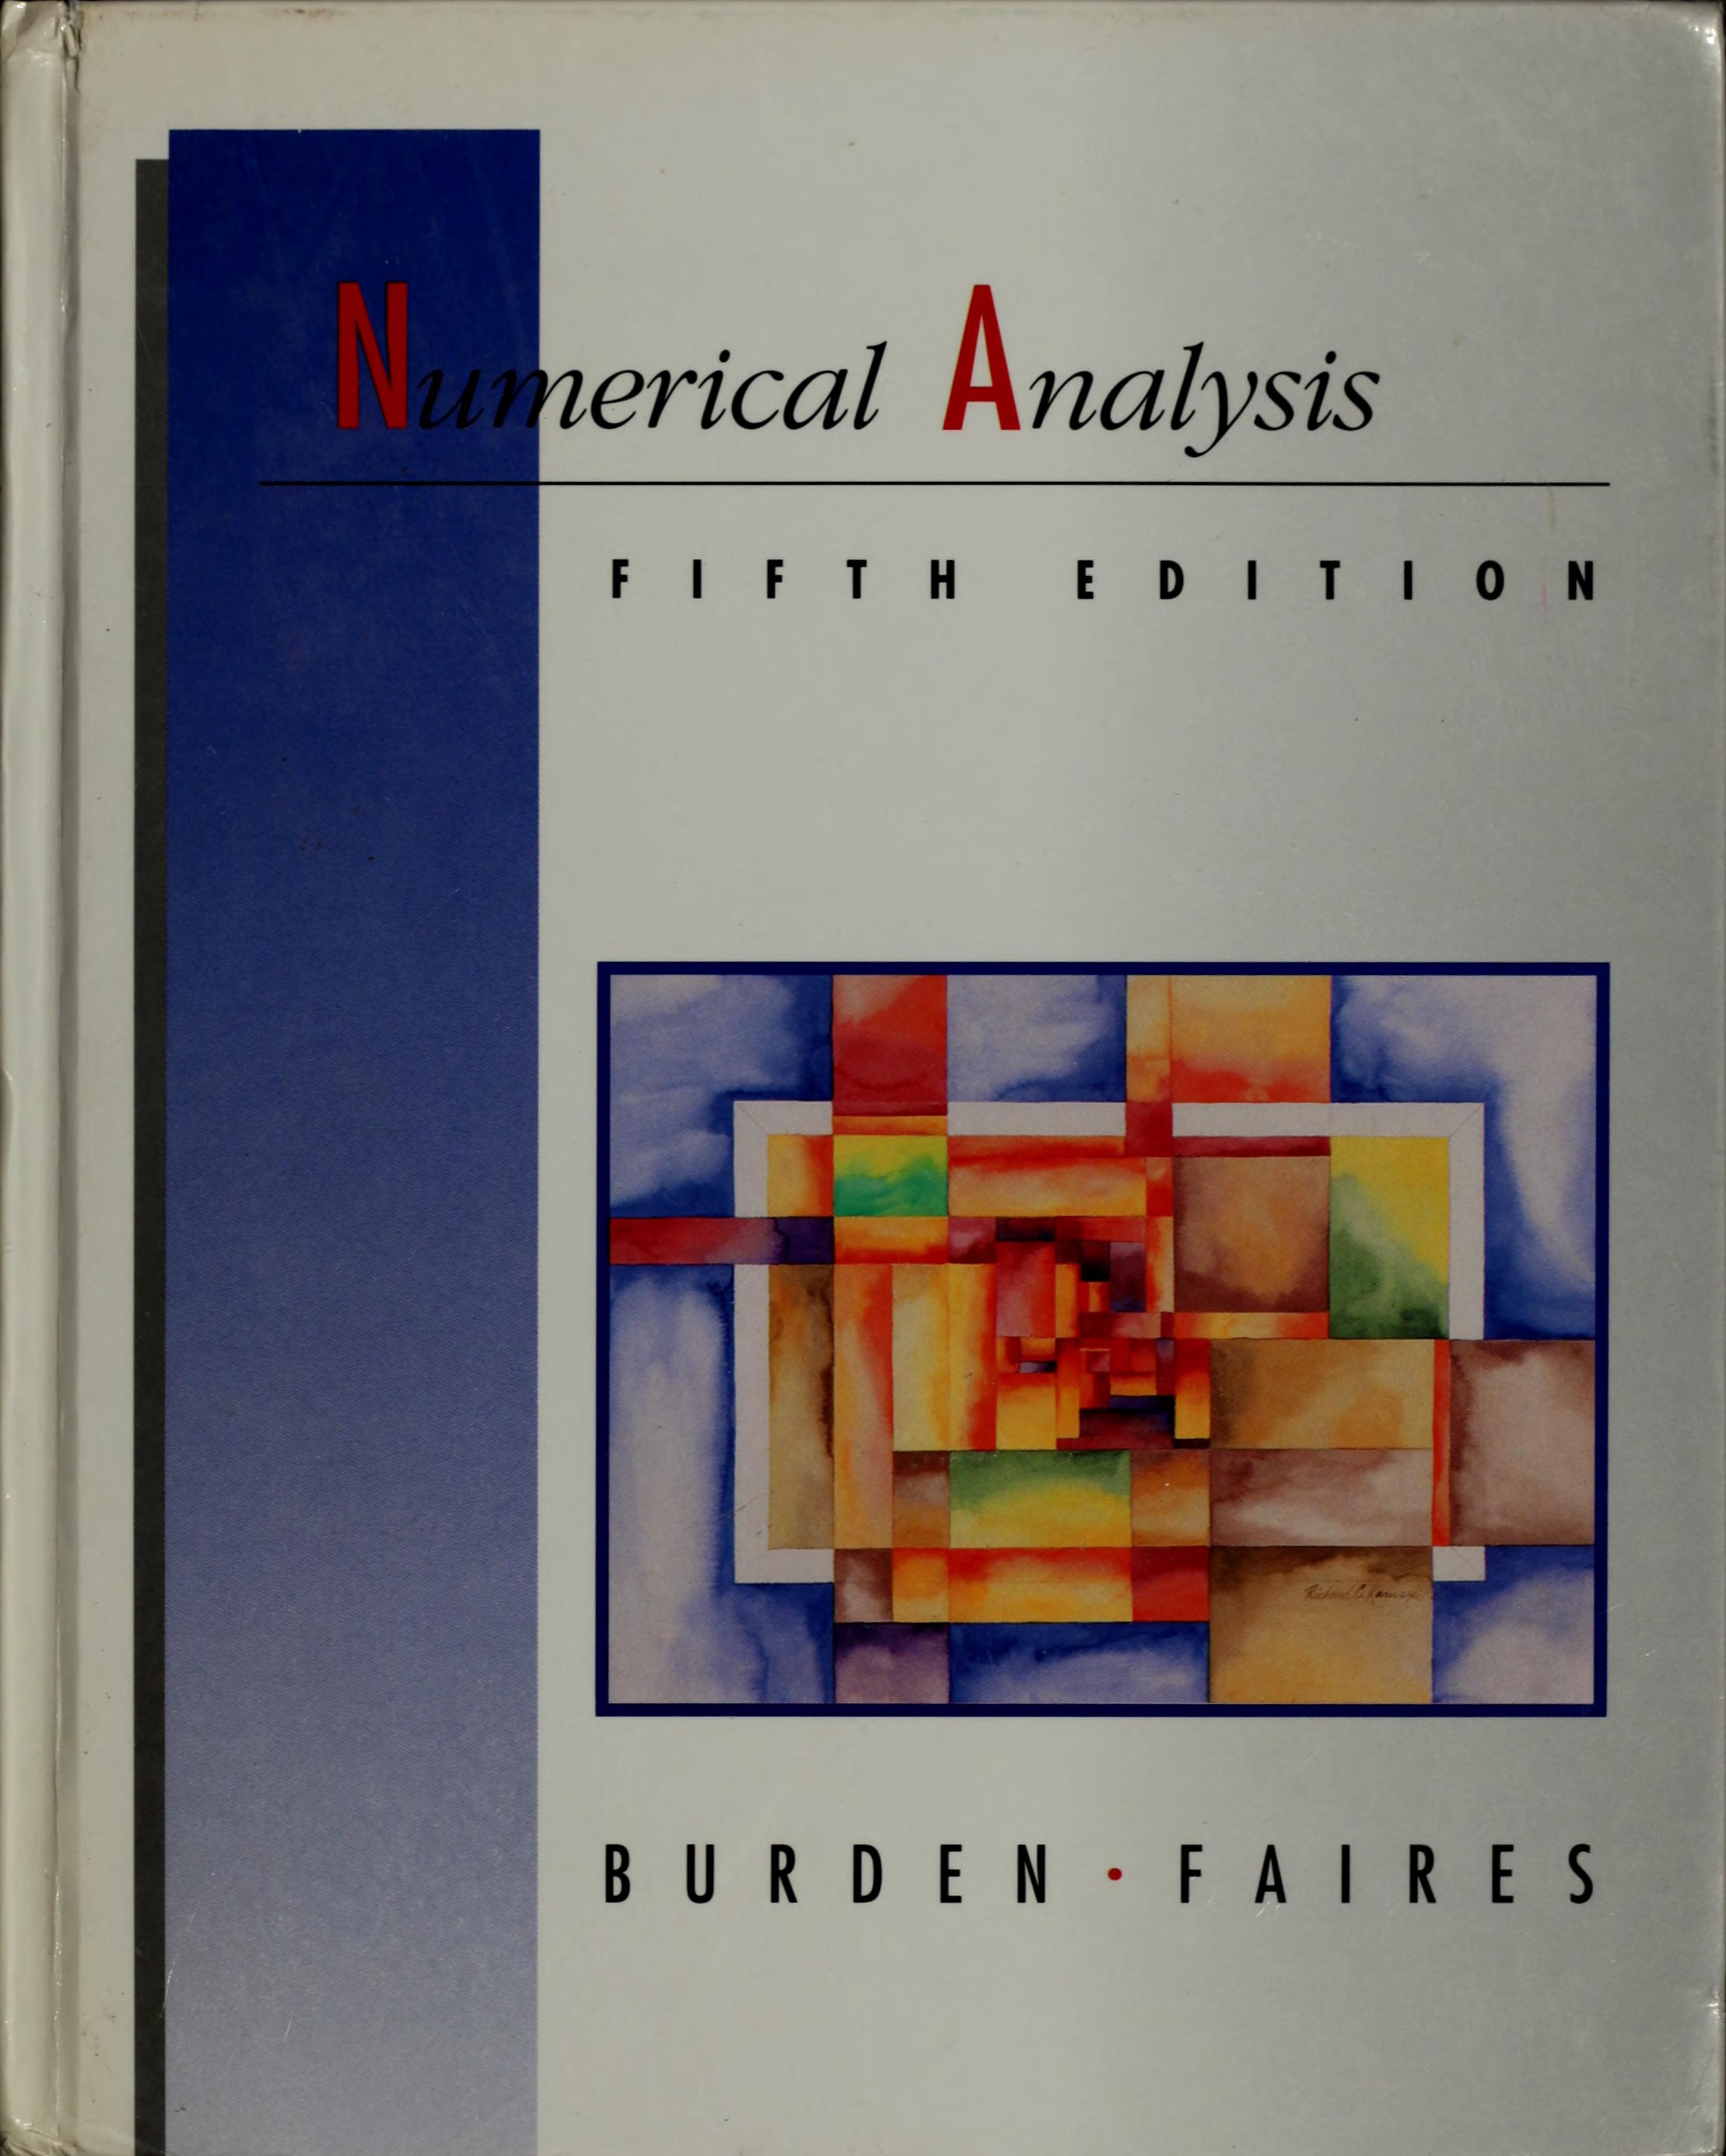 Richard L. Burden, J. Douglas Faires: Numerical Analysis (Hardcover, 1993, Wadsworth Publishing Company)